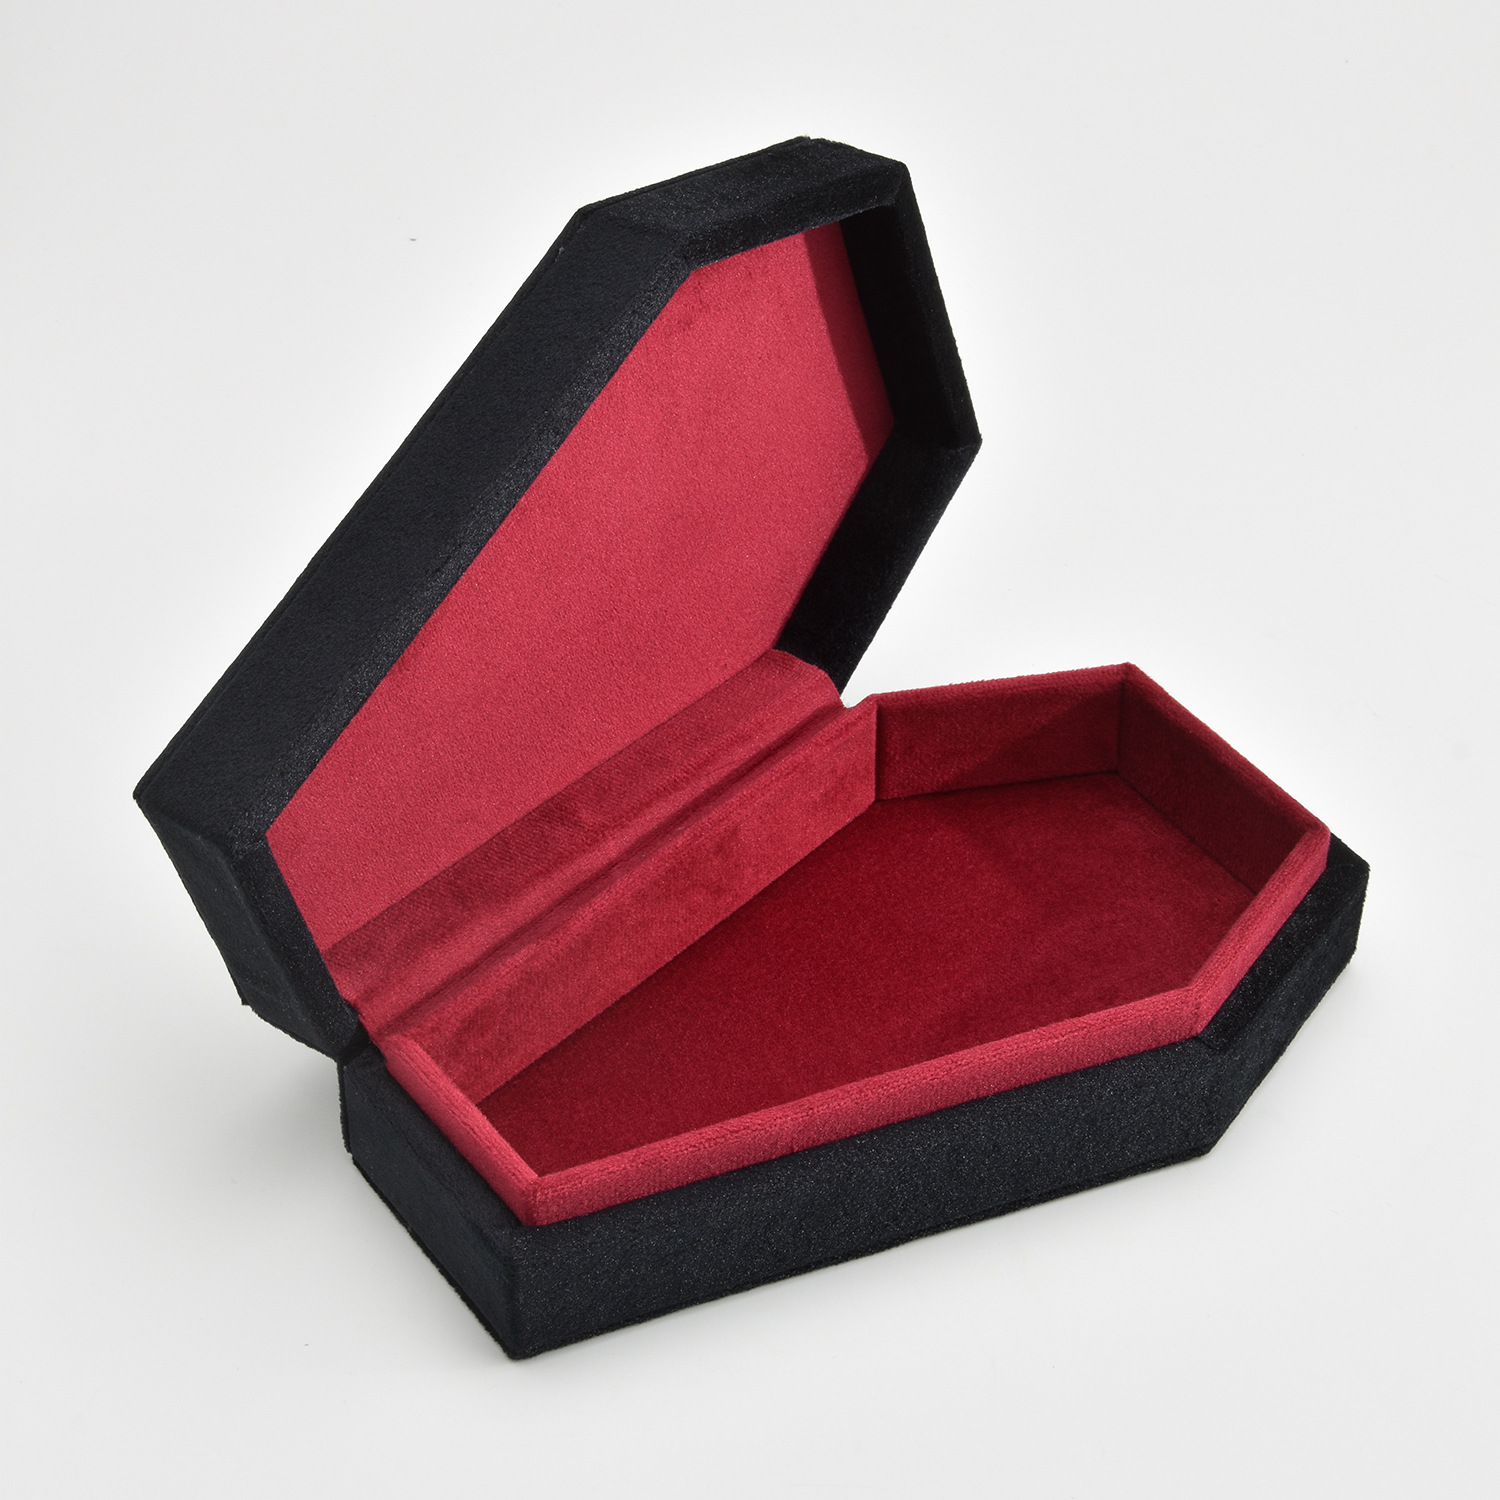 12:G90) velvet casket-shaped (flip-top hollow) case